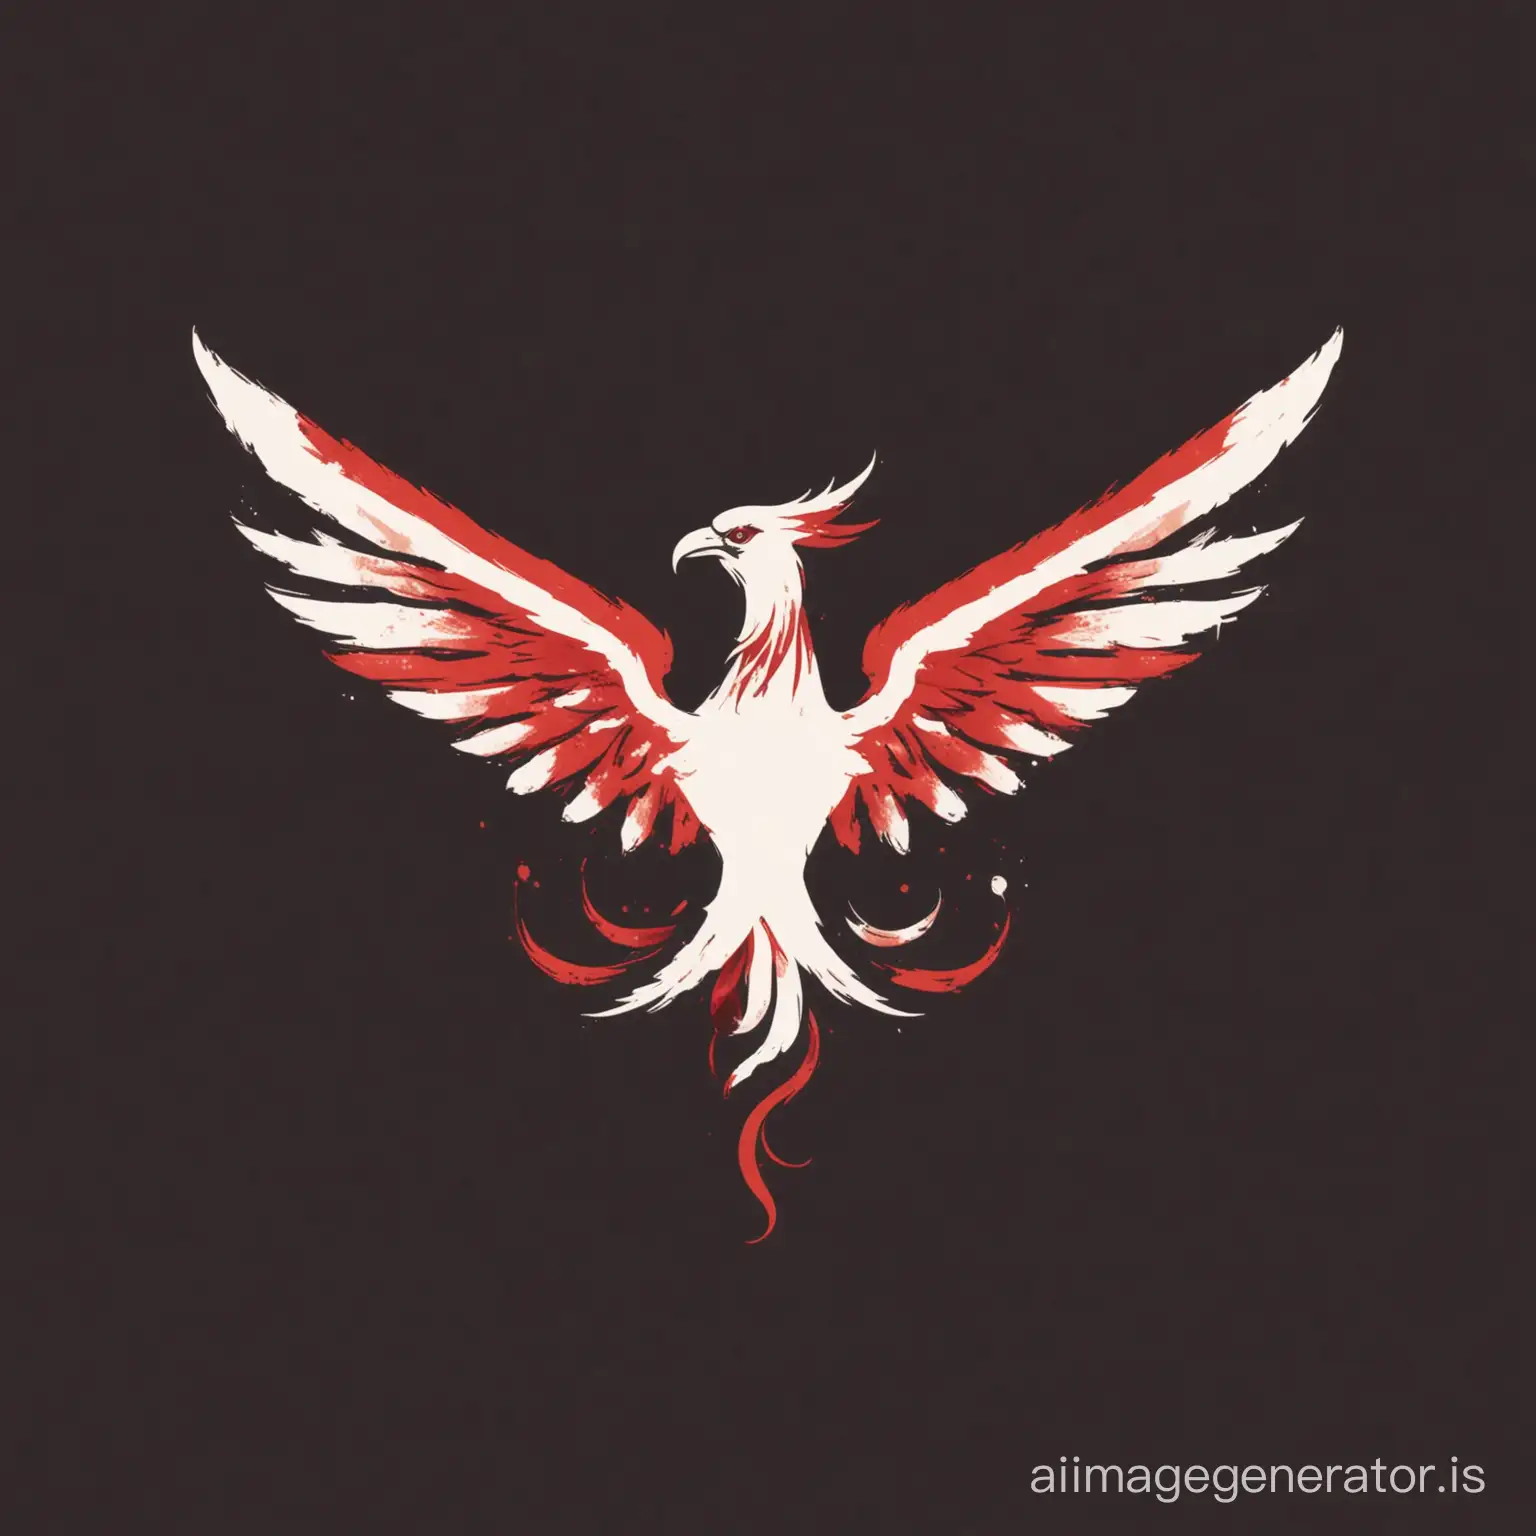 Minimalistic-Red-and-White-Phoenix-Logo-Design